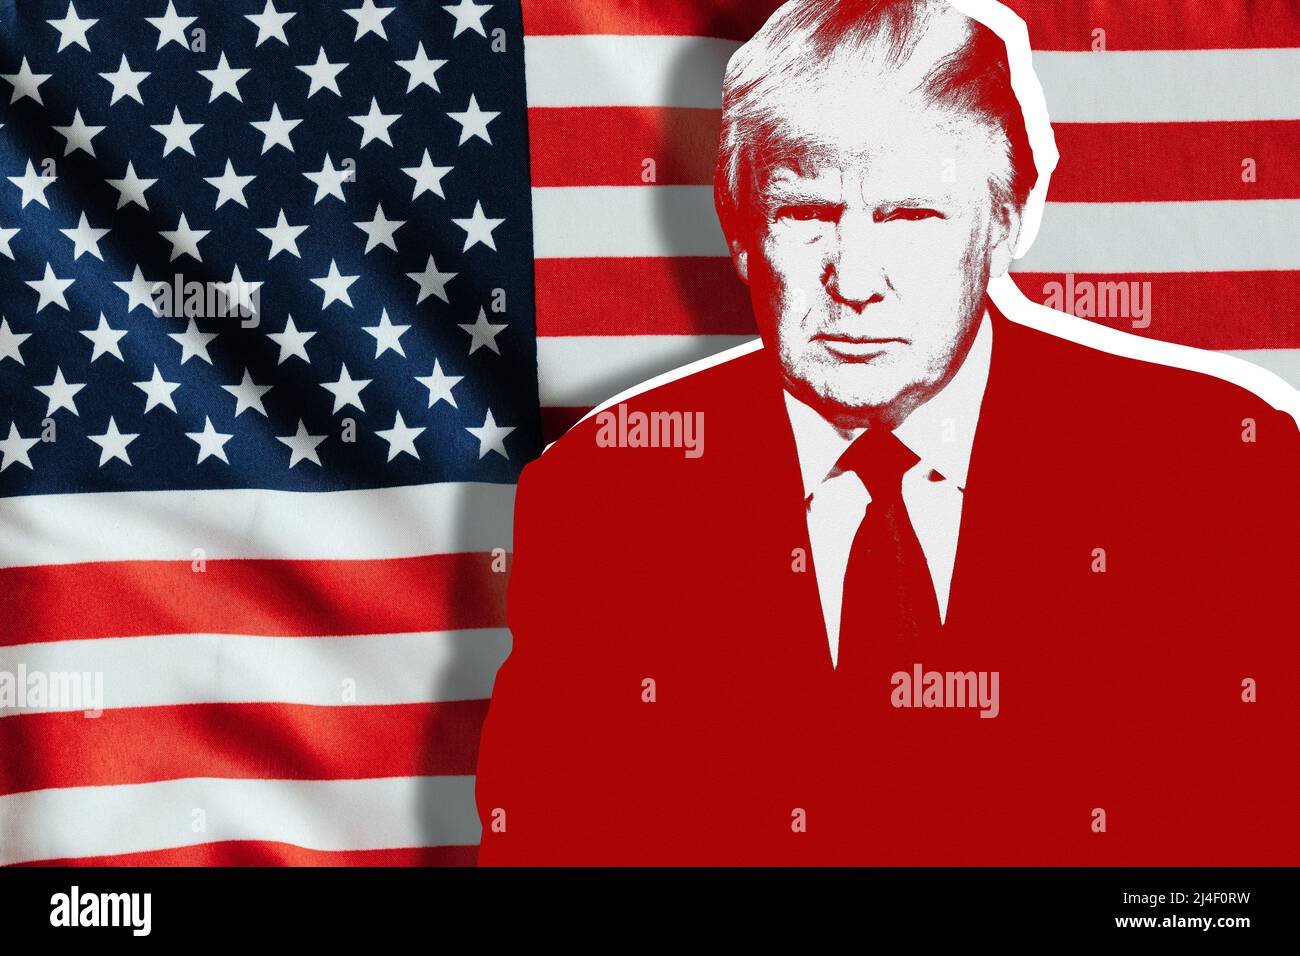 Donald Trump and USA flag Stock Photo